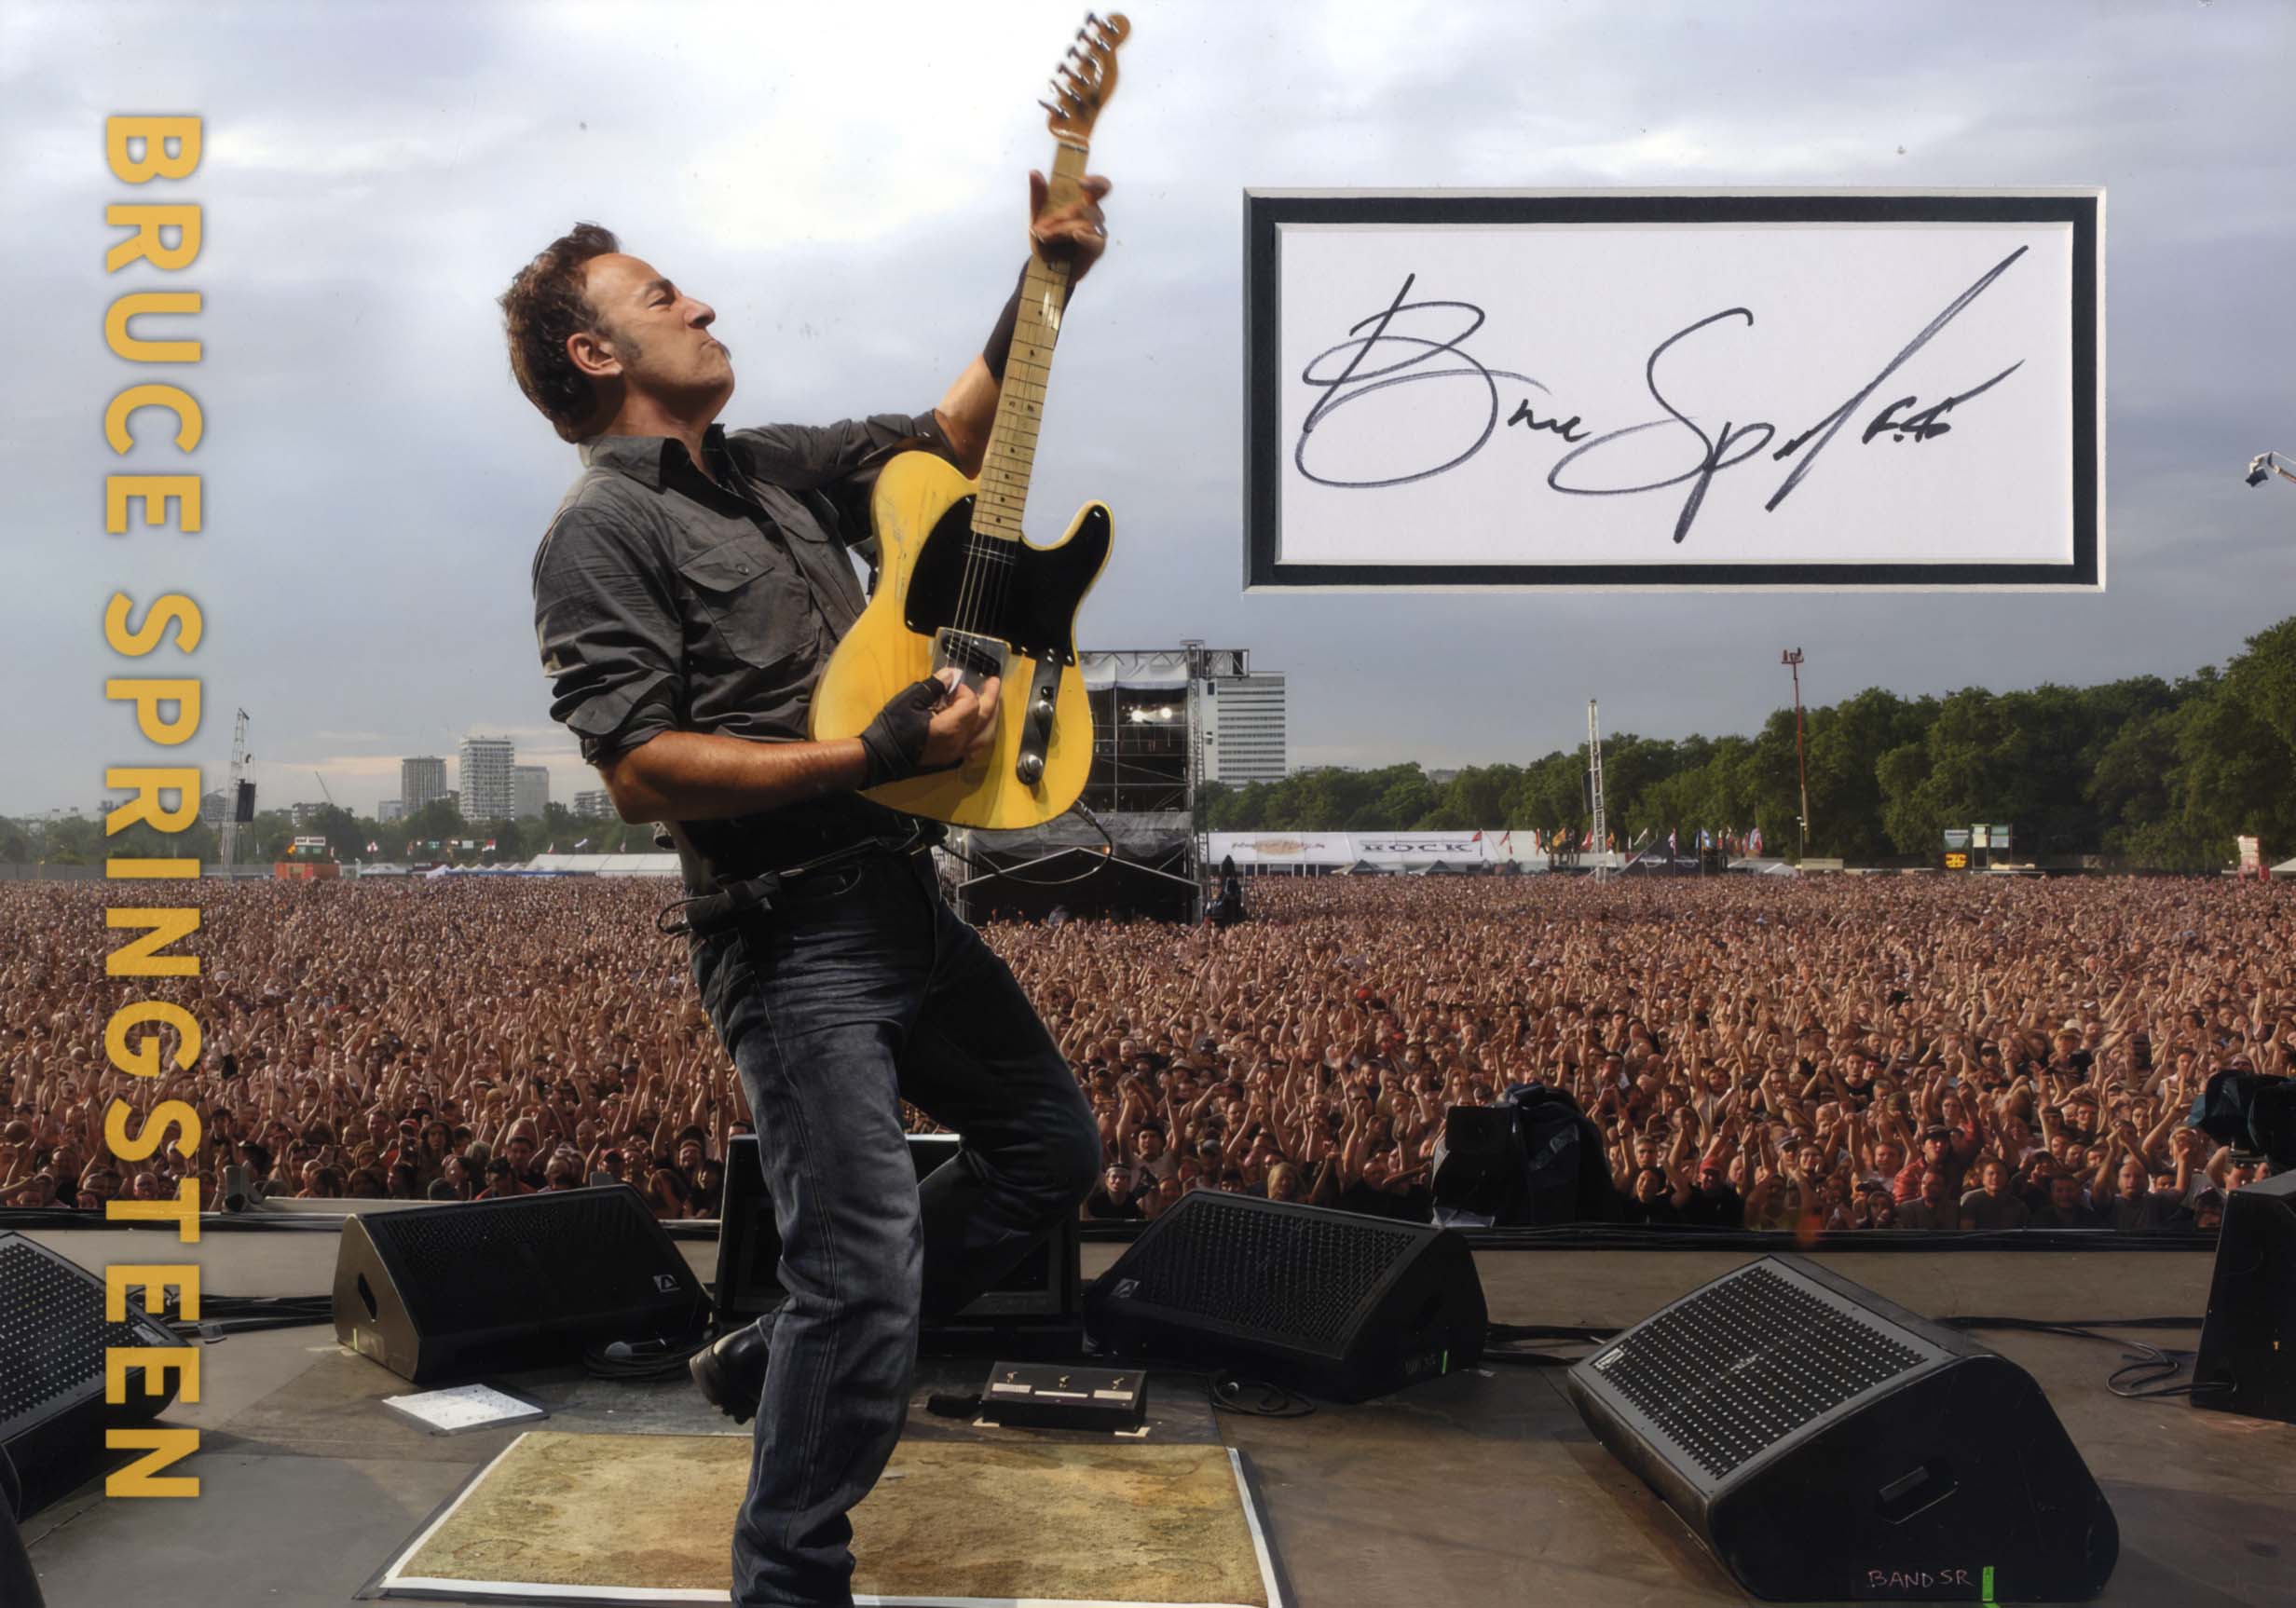 Bruce  Springsteen Autograph Autogramm | ID 8479307694229